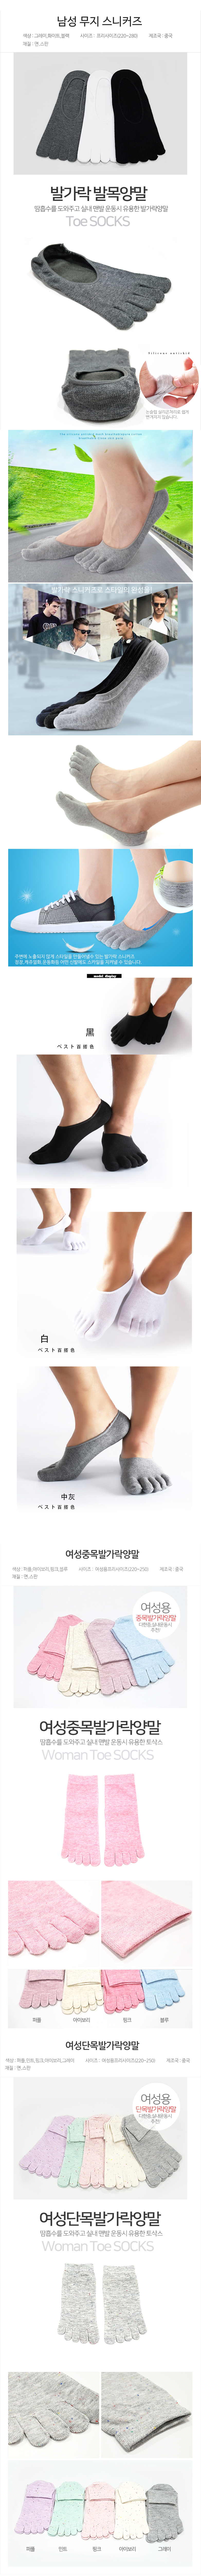 woman-footsocks.jpg